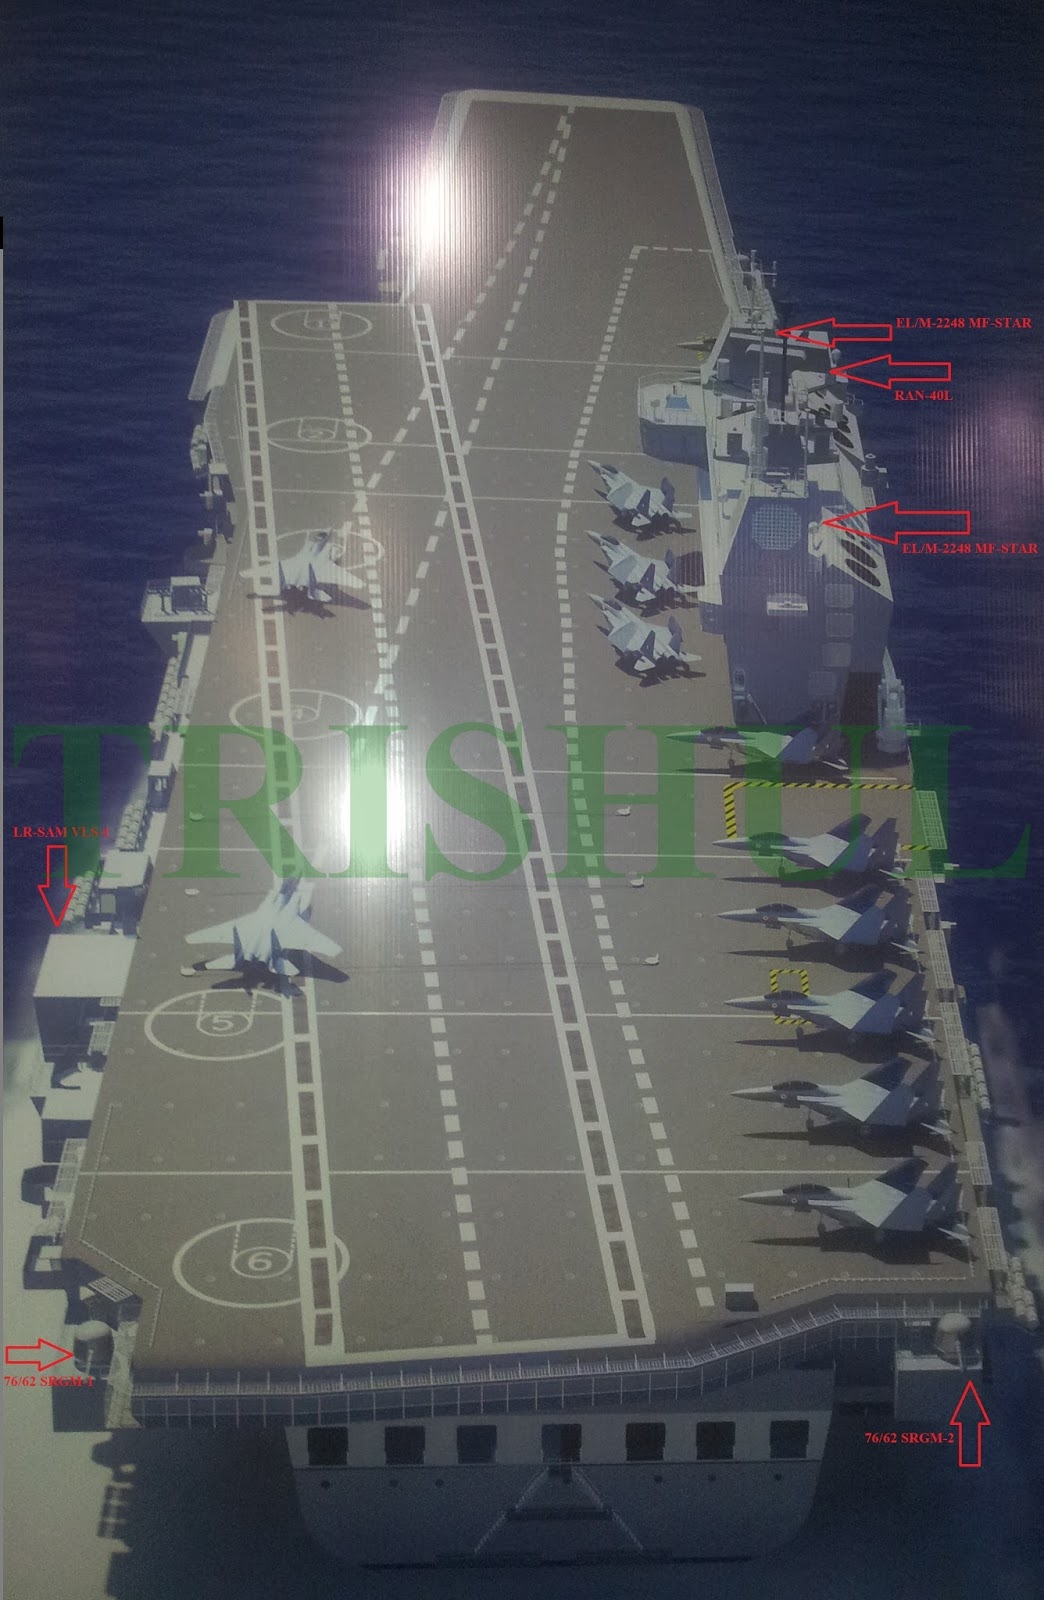 IAC-1+INS+Vikrant%27s+Radars+&+Weapons.jpg